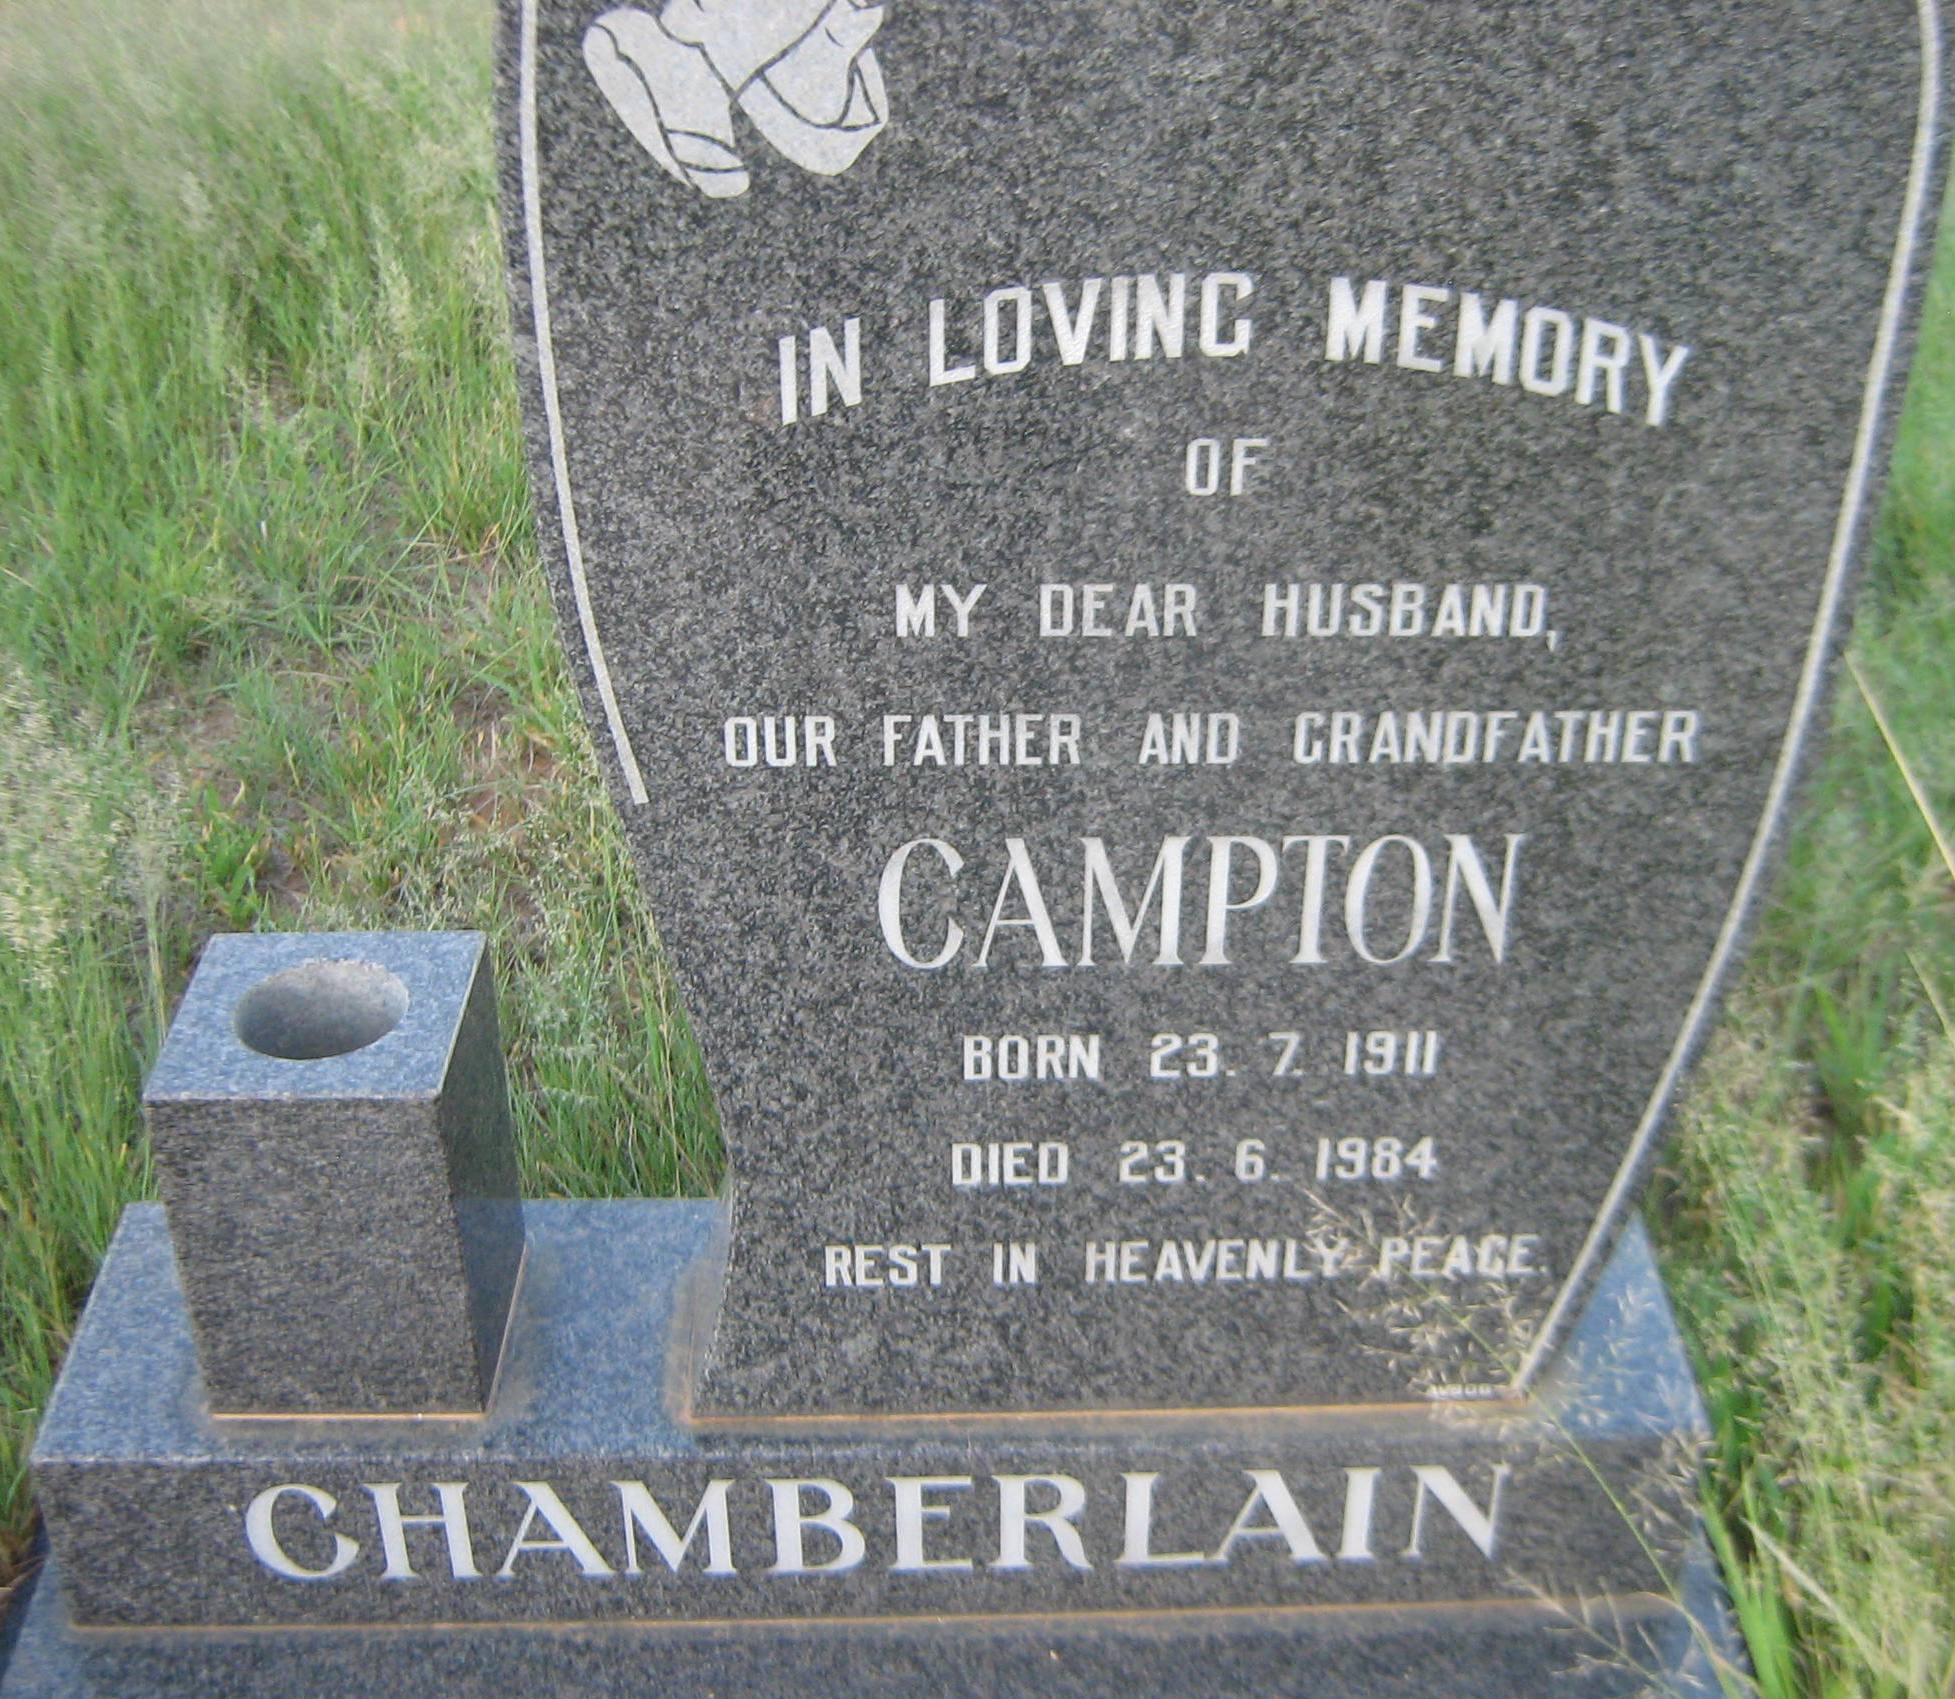 CHAMBERLAIN Campton 1911-1984